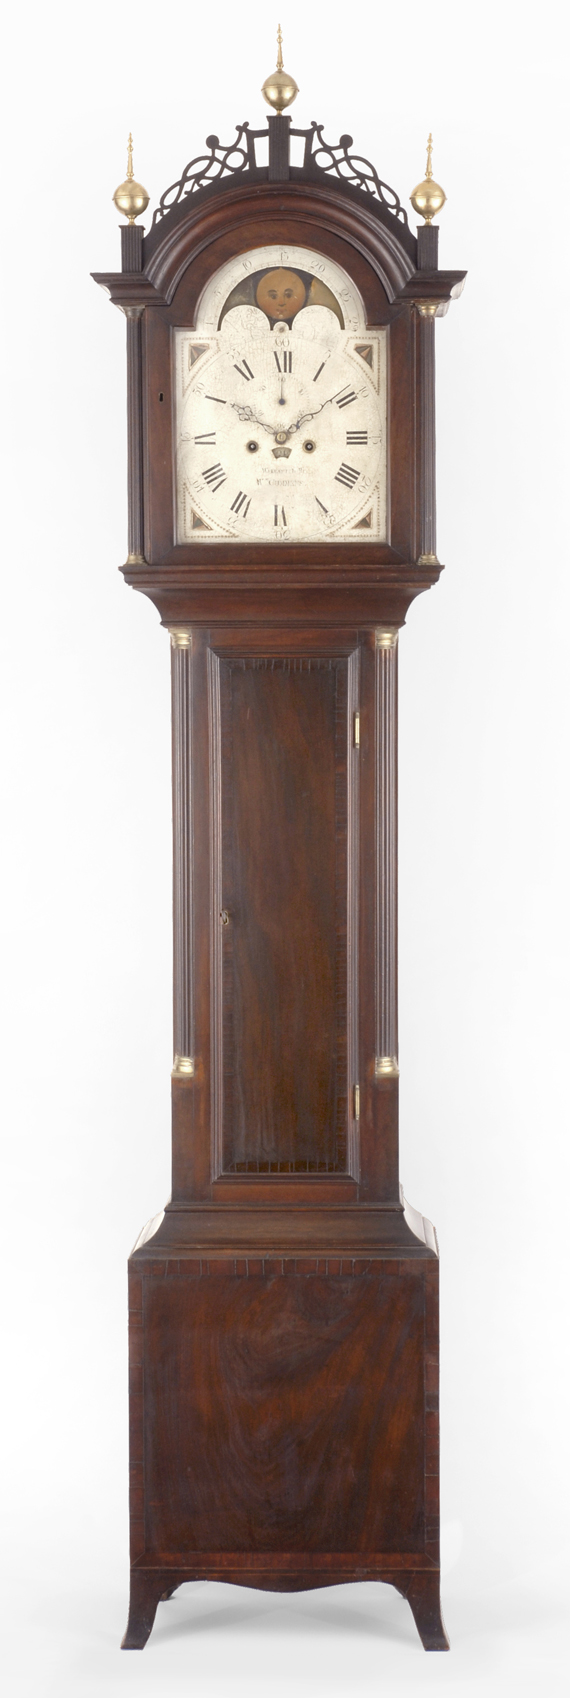 The Rockwood Family Federal Mahogany Tall Case Clock By William Cummens, Roxbury, Massachusetts, circa 1811.